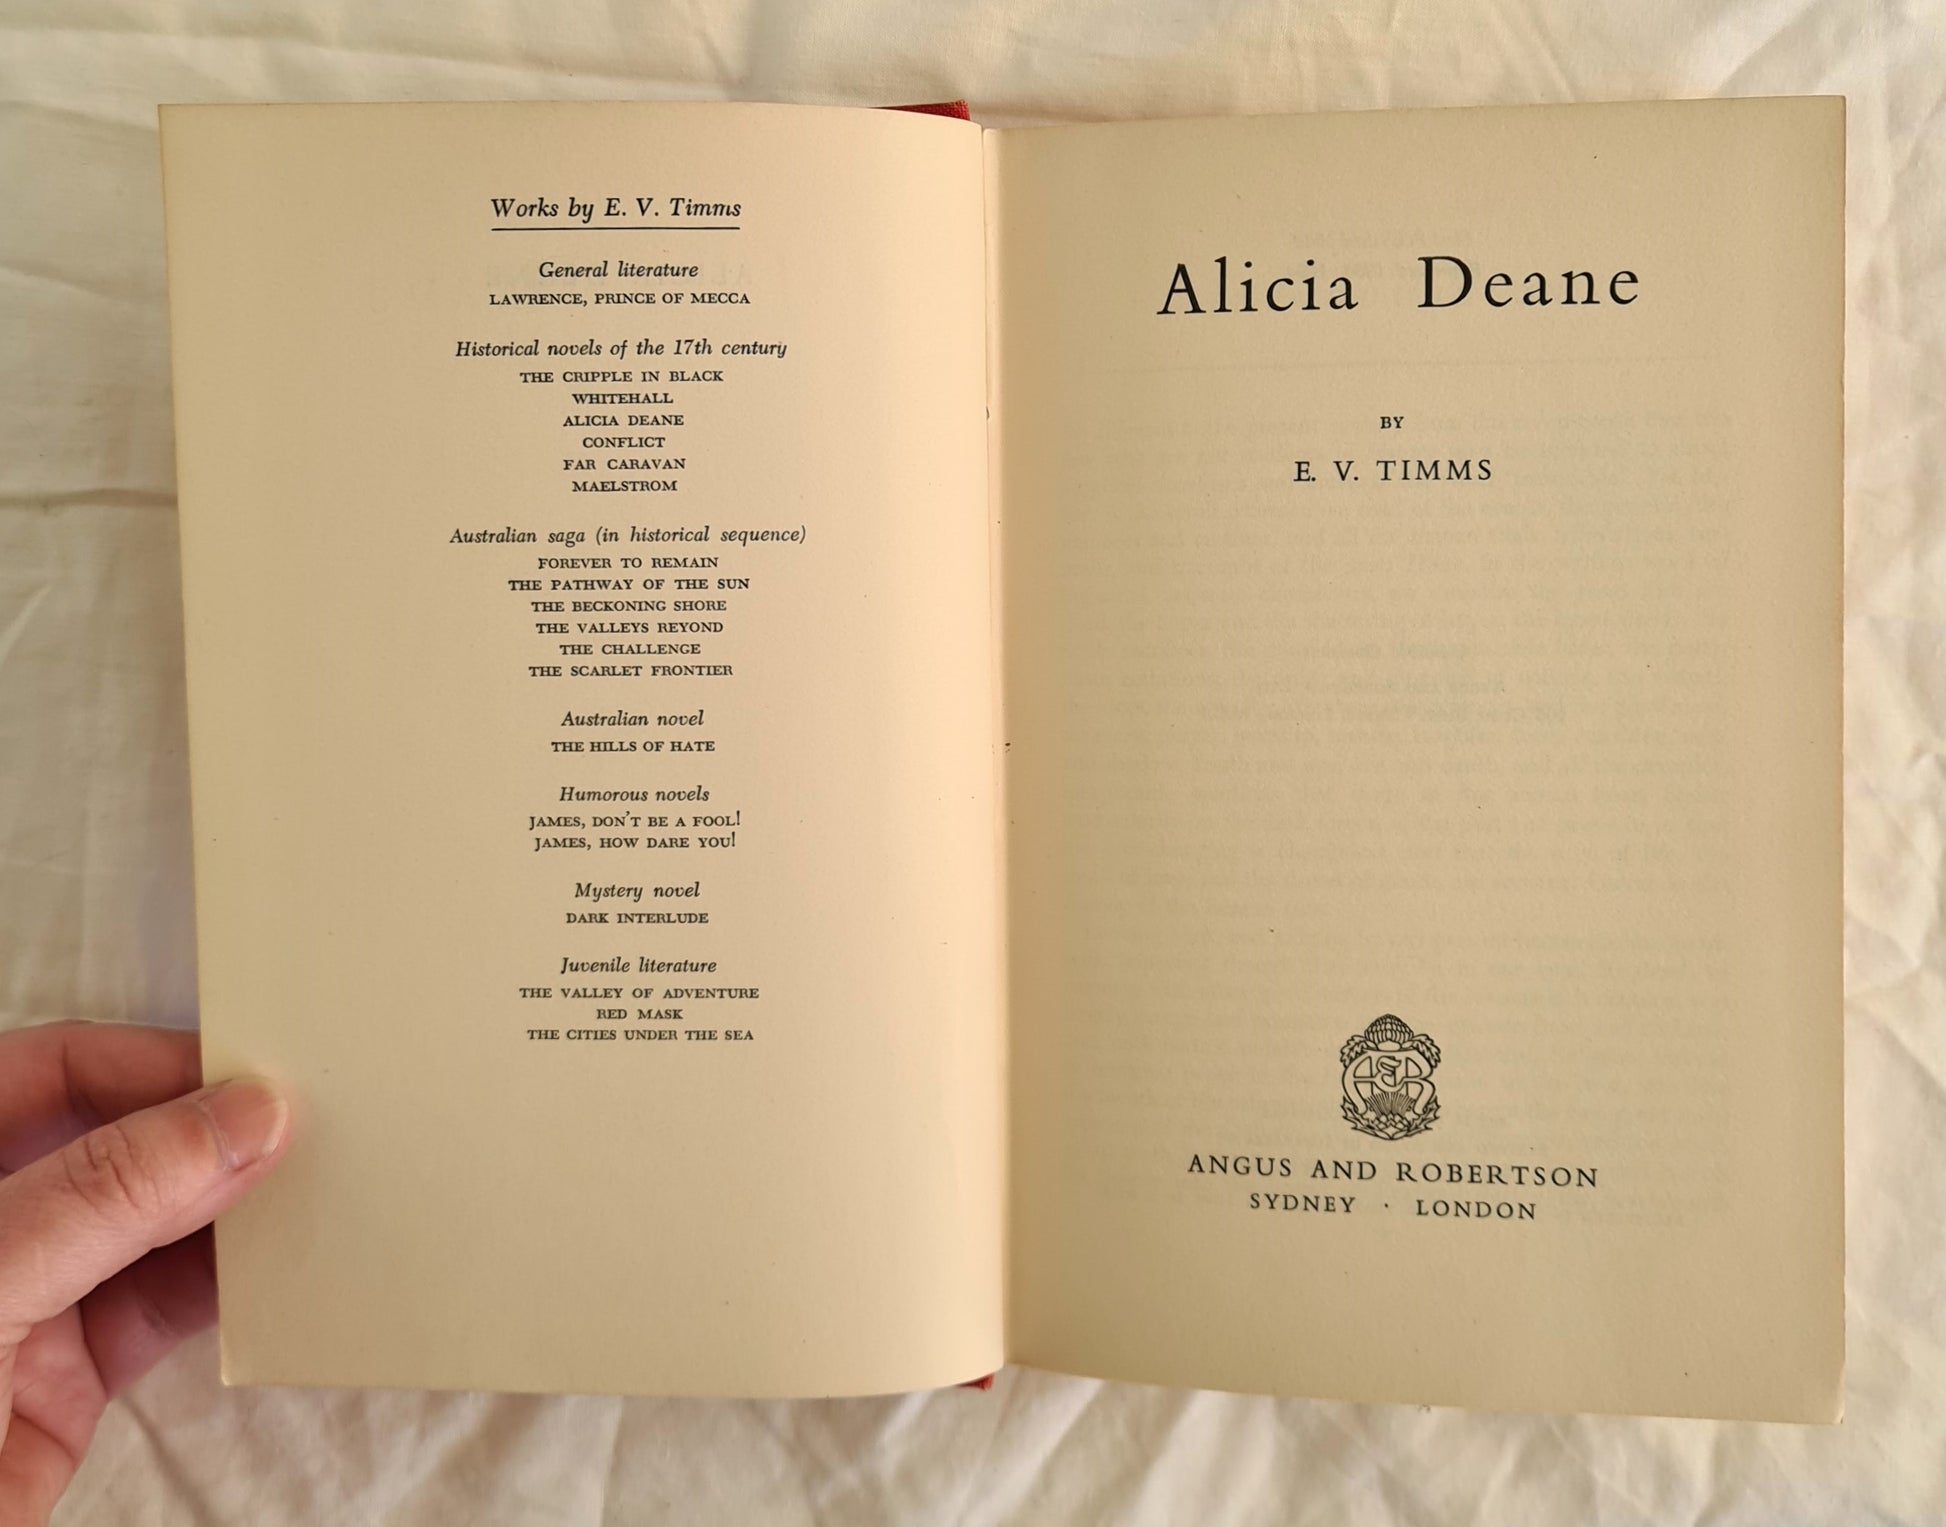 Alicia Deane by E. V. Timms (1954)